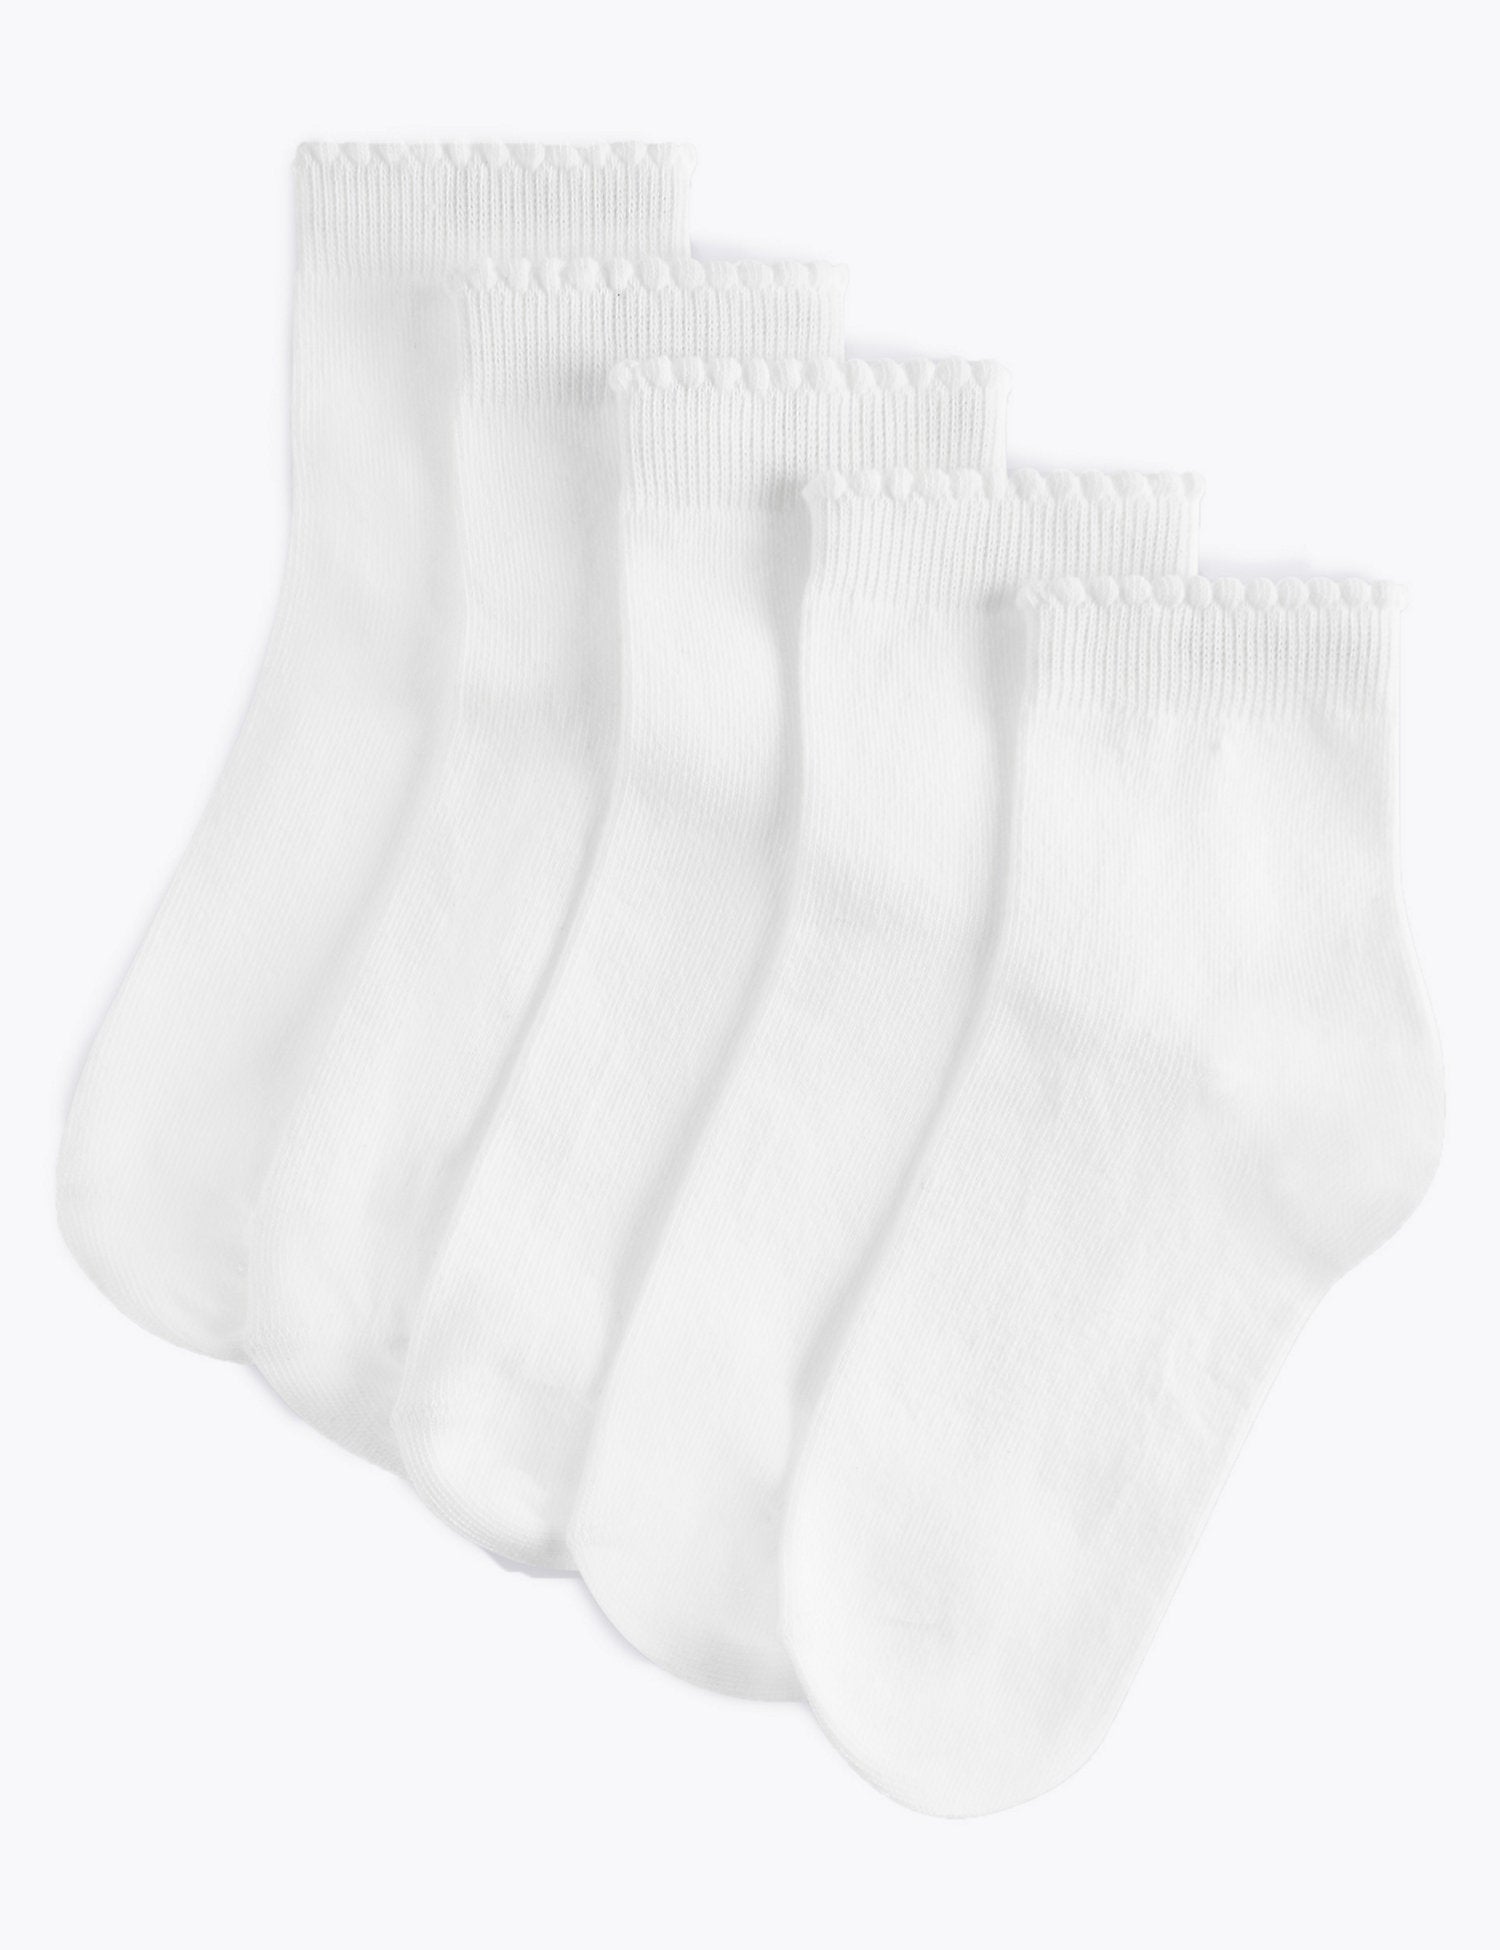 5 Pairs of Short Picot Socks